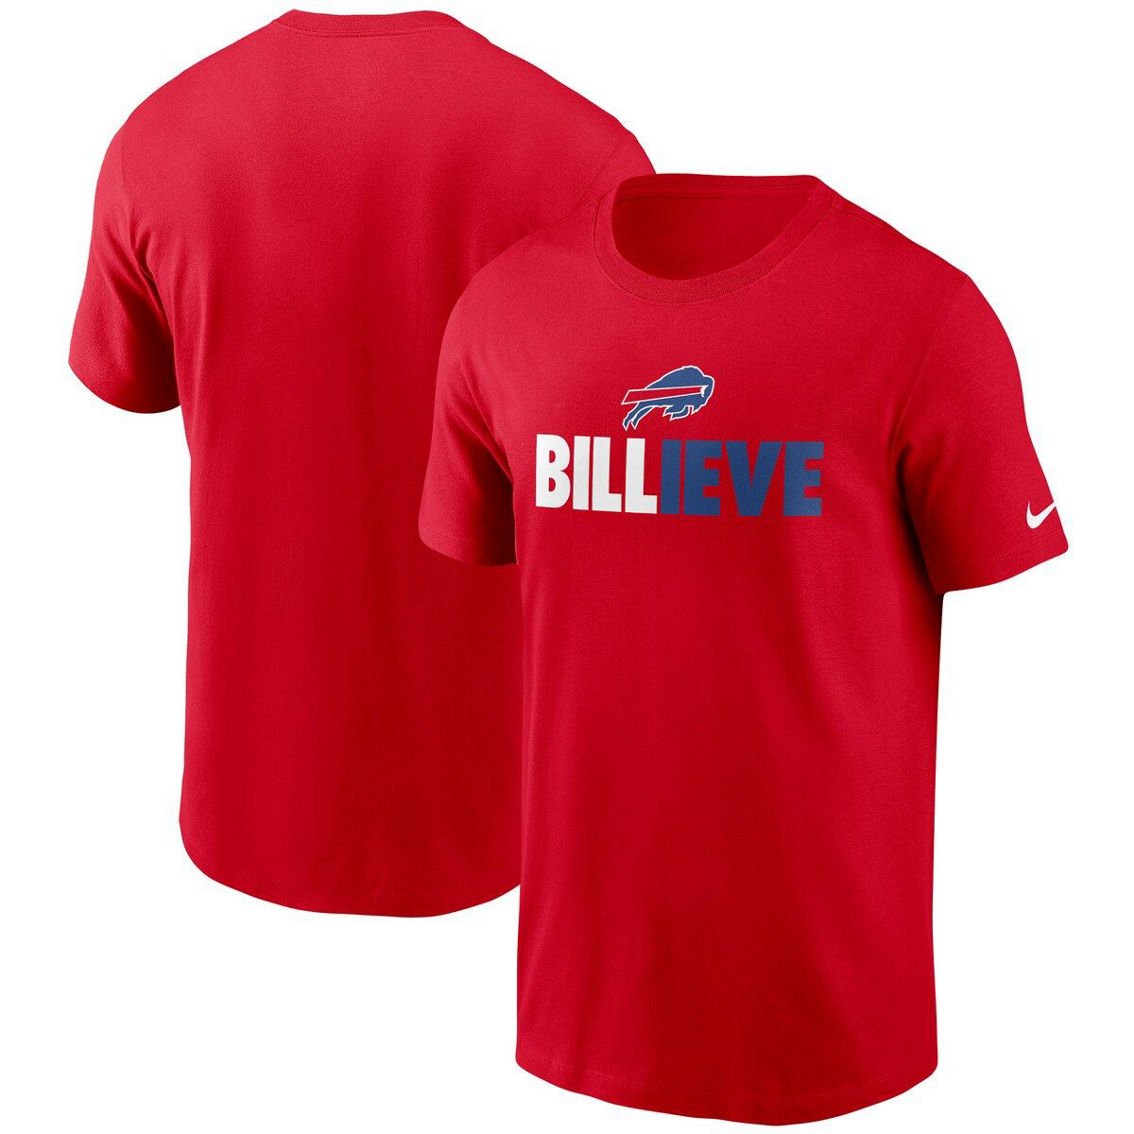 Nike Men's Red Buffalo Bills Hometown Collection T-Shirt - Image 2 of 4